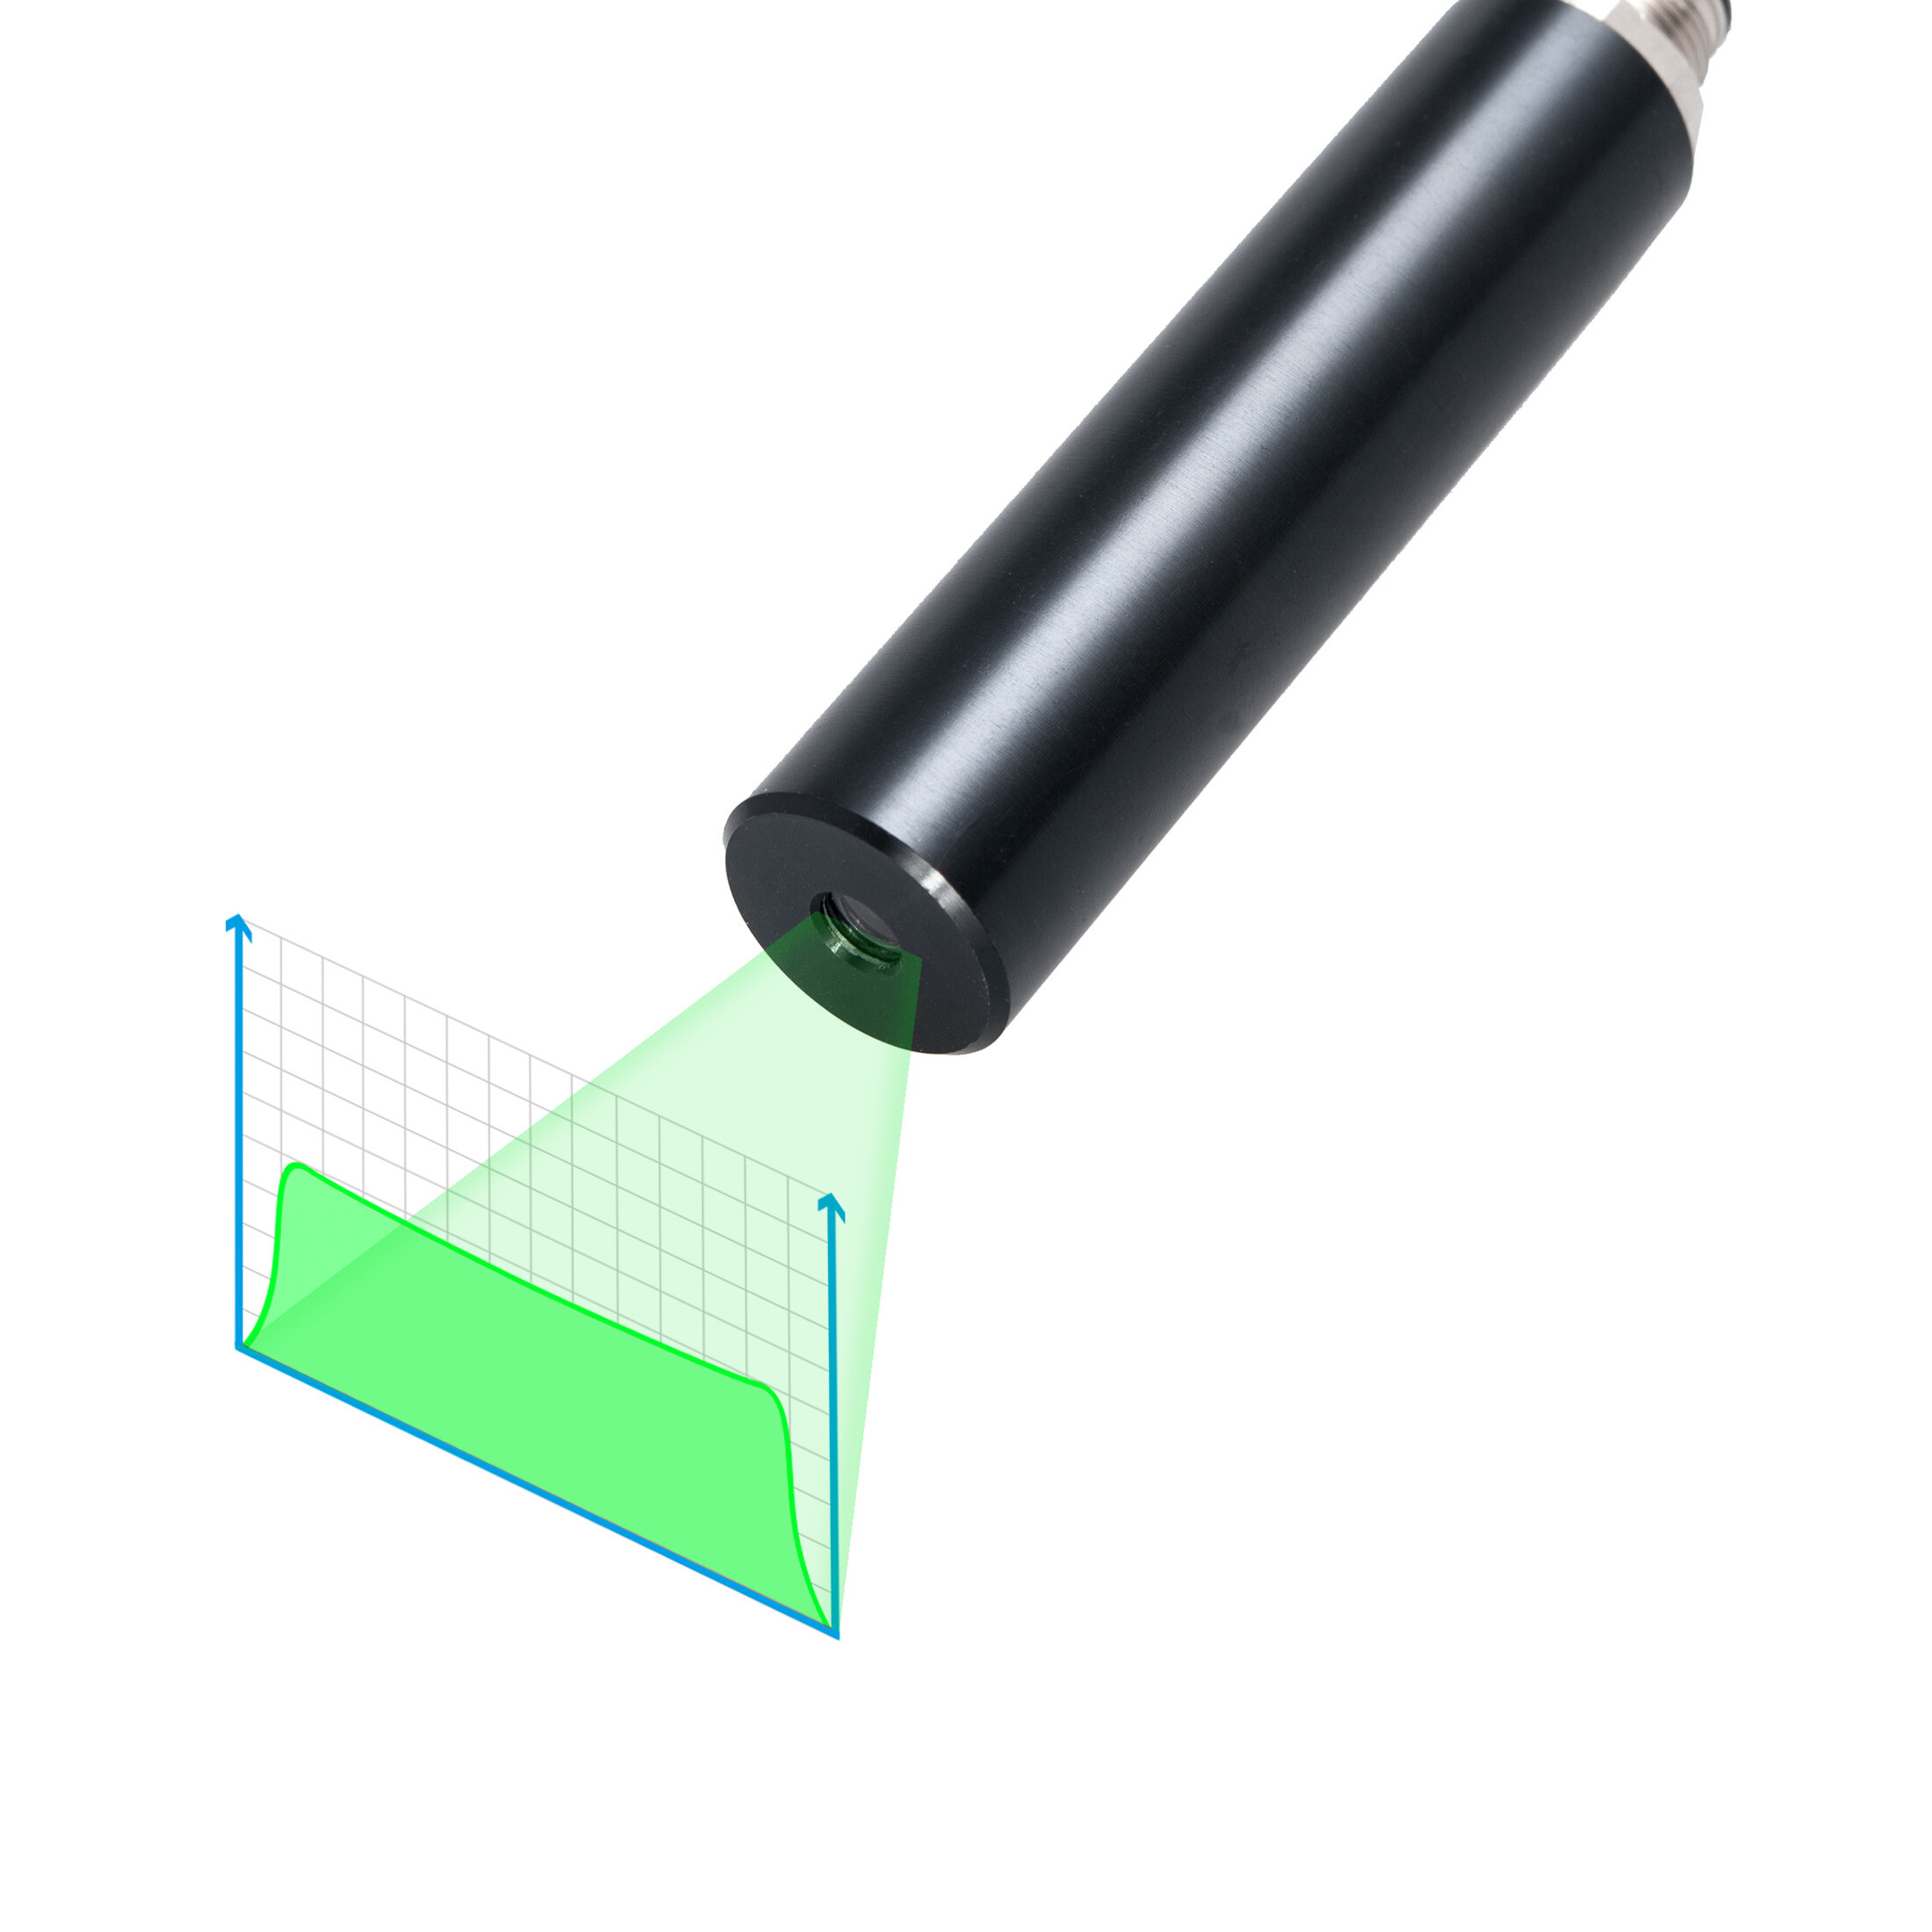 Line laser, green, 520 nm, 110 °, 10 mW, 24 V DC, Ø32x115 mm, Laser Class 2M, Focus fixed (3000mm),…